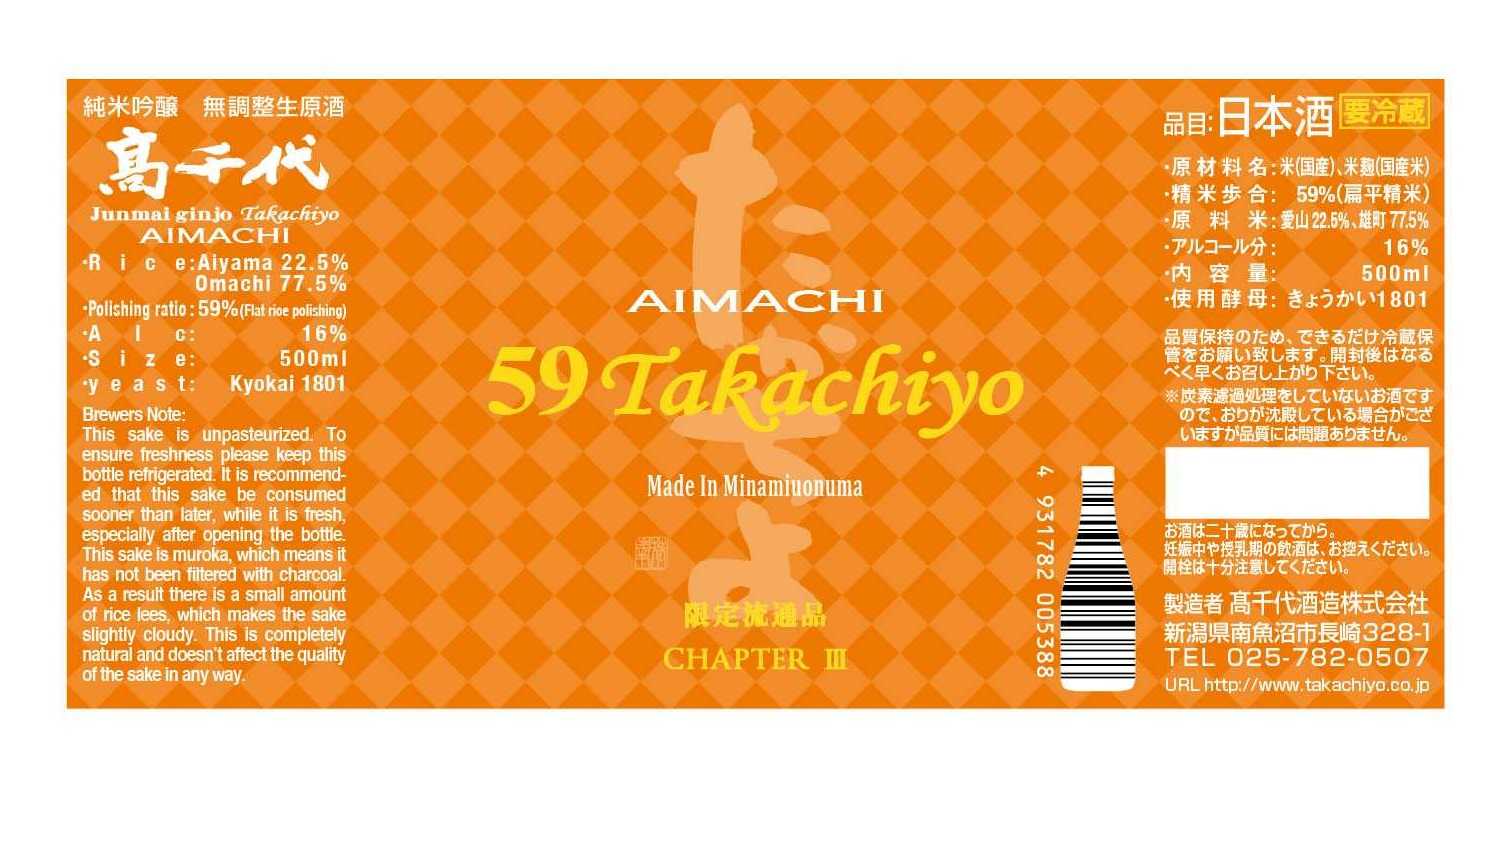 59takachiyoアイマチリニューアル 埼玉 大宮の地酒屋の日本酒 ウイスキーブログ 楽天ブログ